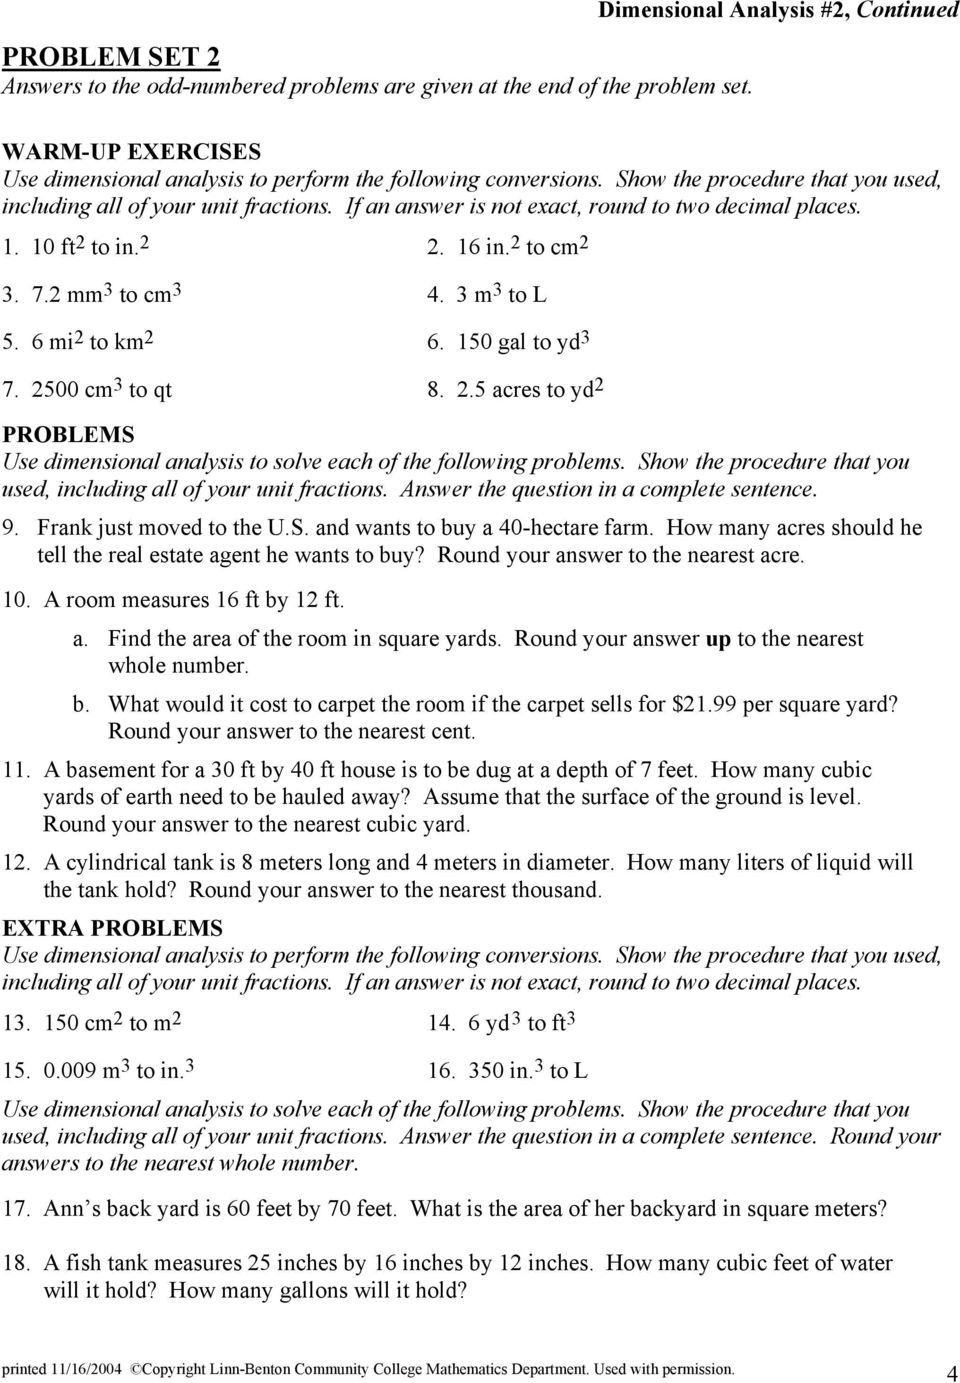 algebra-1-unit-conversion-worksheet-answers-db-excel